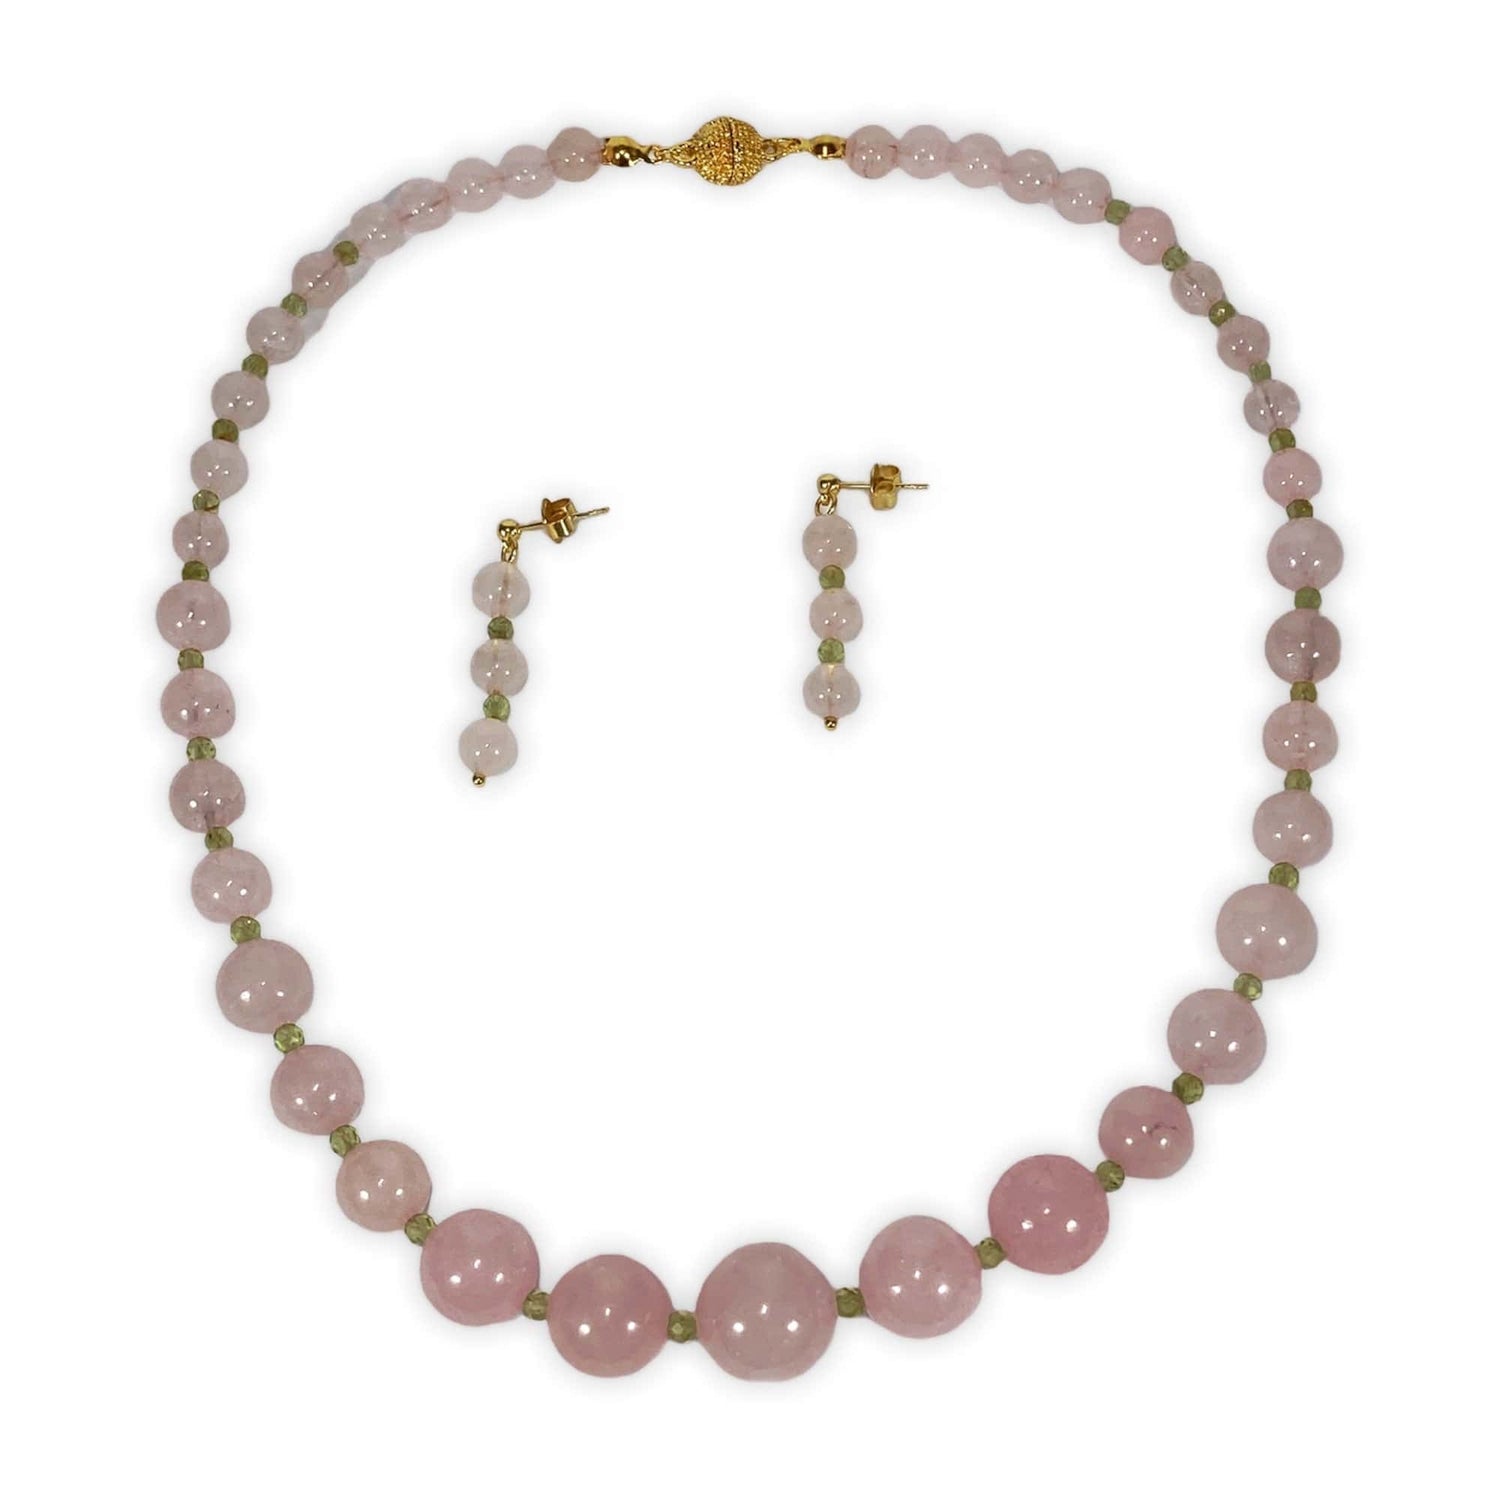 Handmade Rose Quartz And Peridot Gemstone Necklace Set